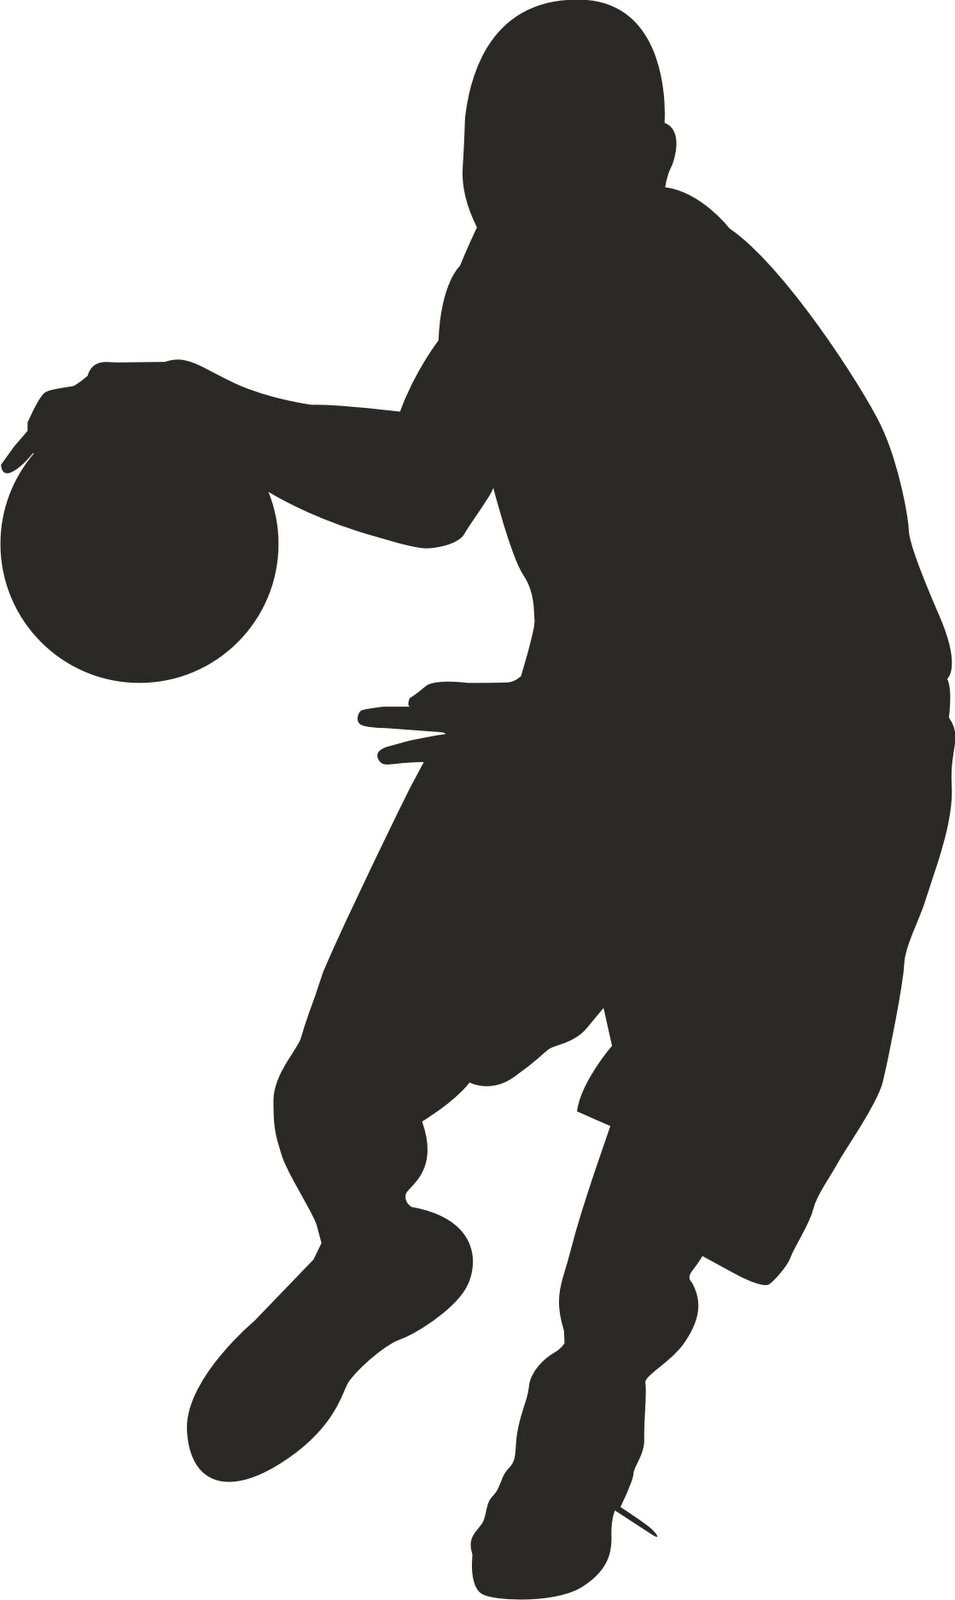 Boy Playing Basketball | Free Download Clip Art | Free Clip Art ...